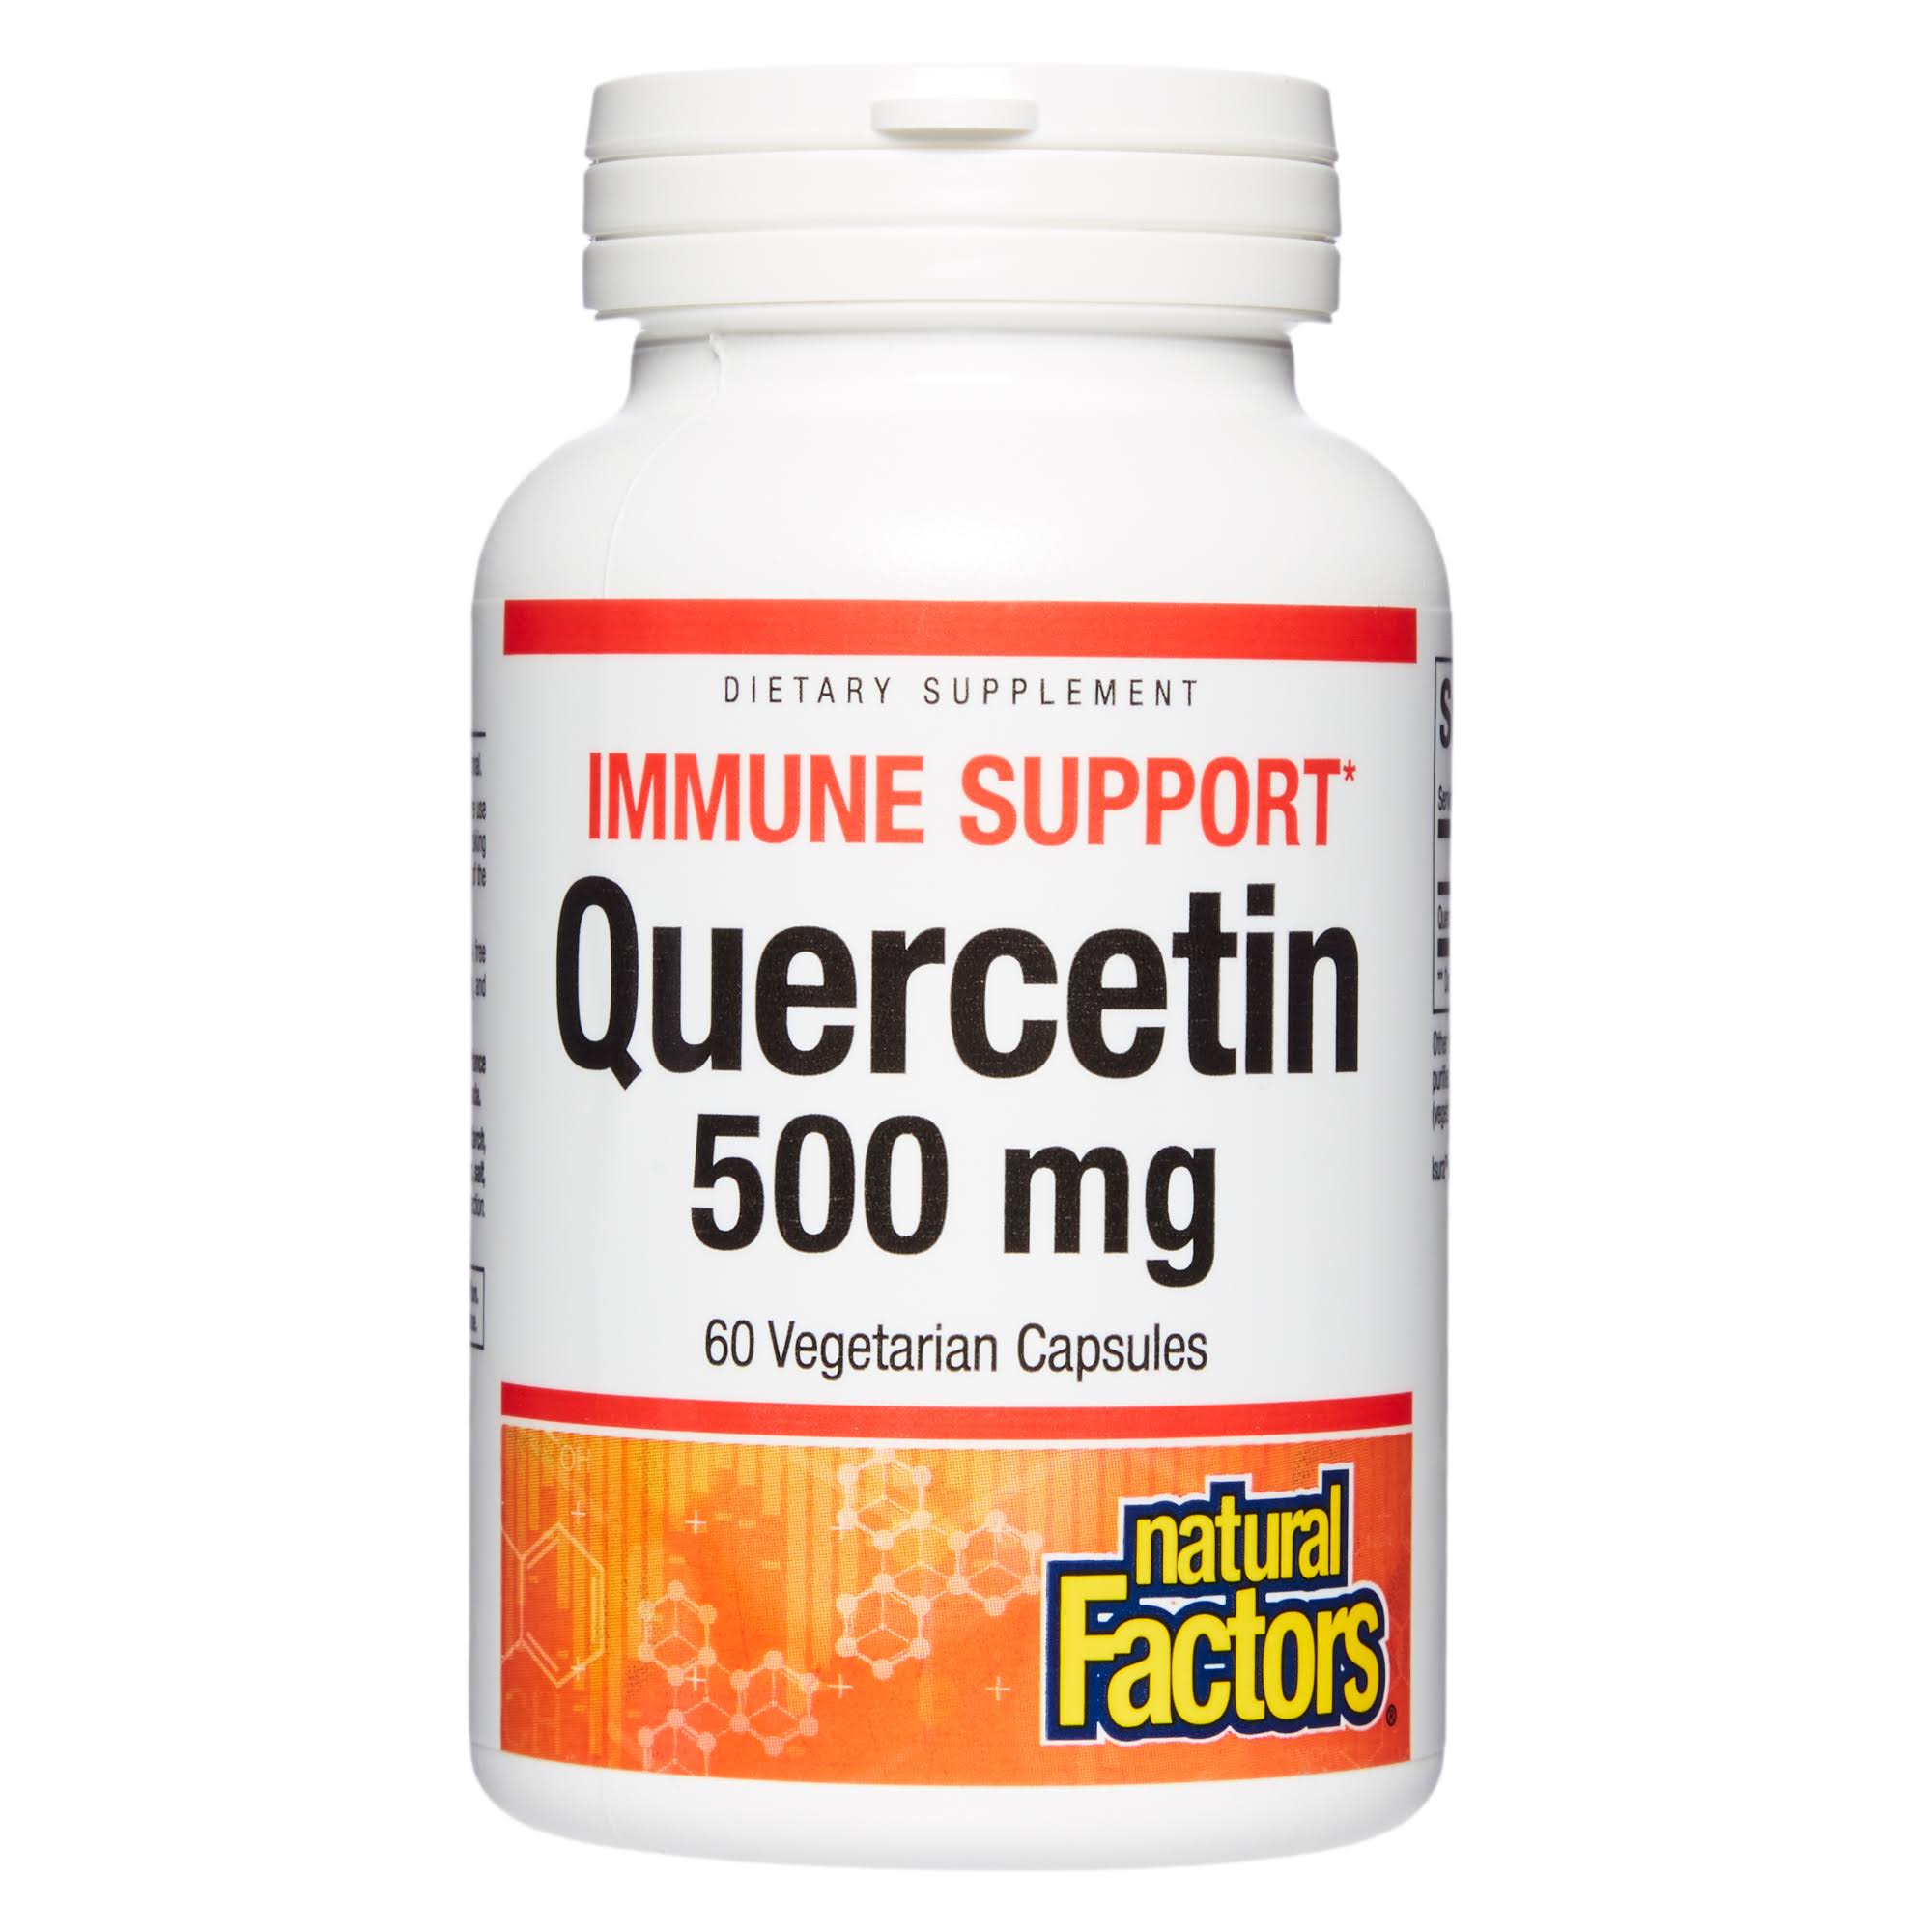 Natural Factors Quercetin 500 mg - 60 Vegetarian Capsules